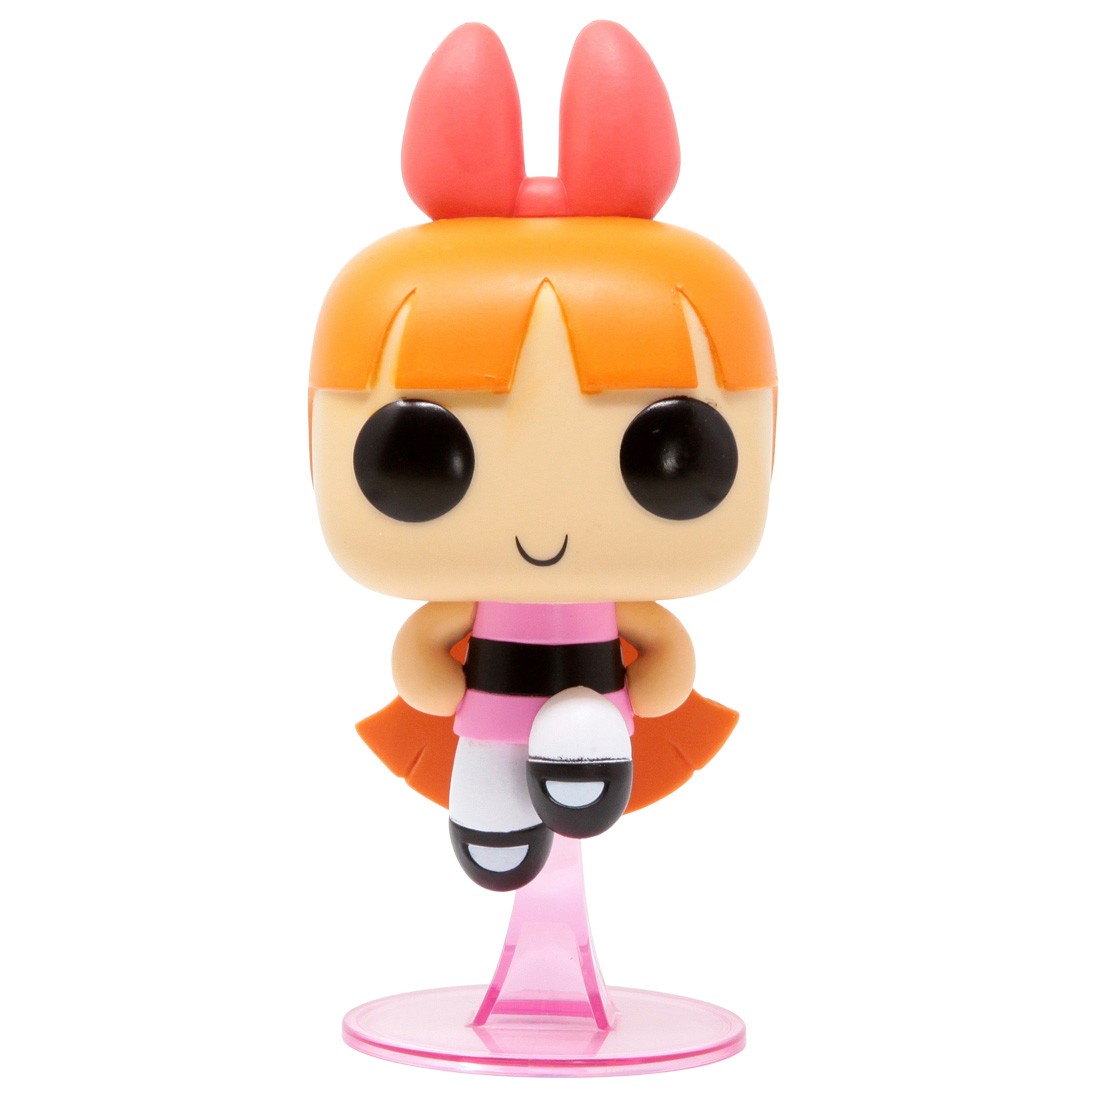 Funko POP Animation The Powerpuff Girls - Blossom (orange)